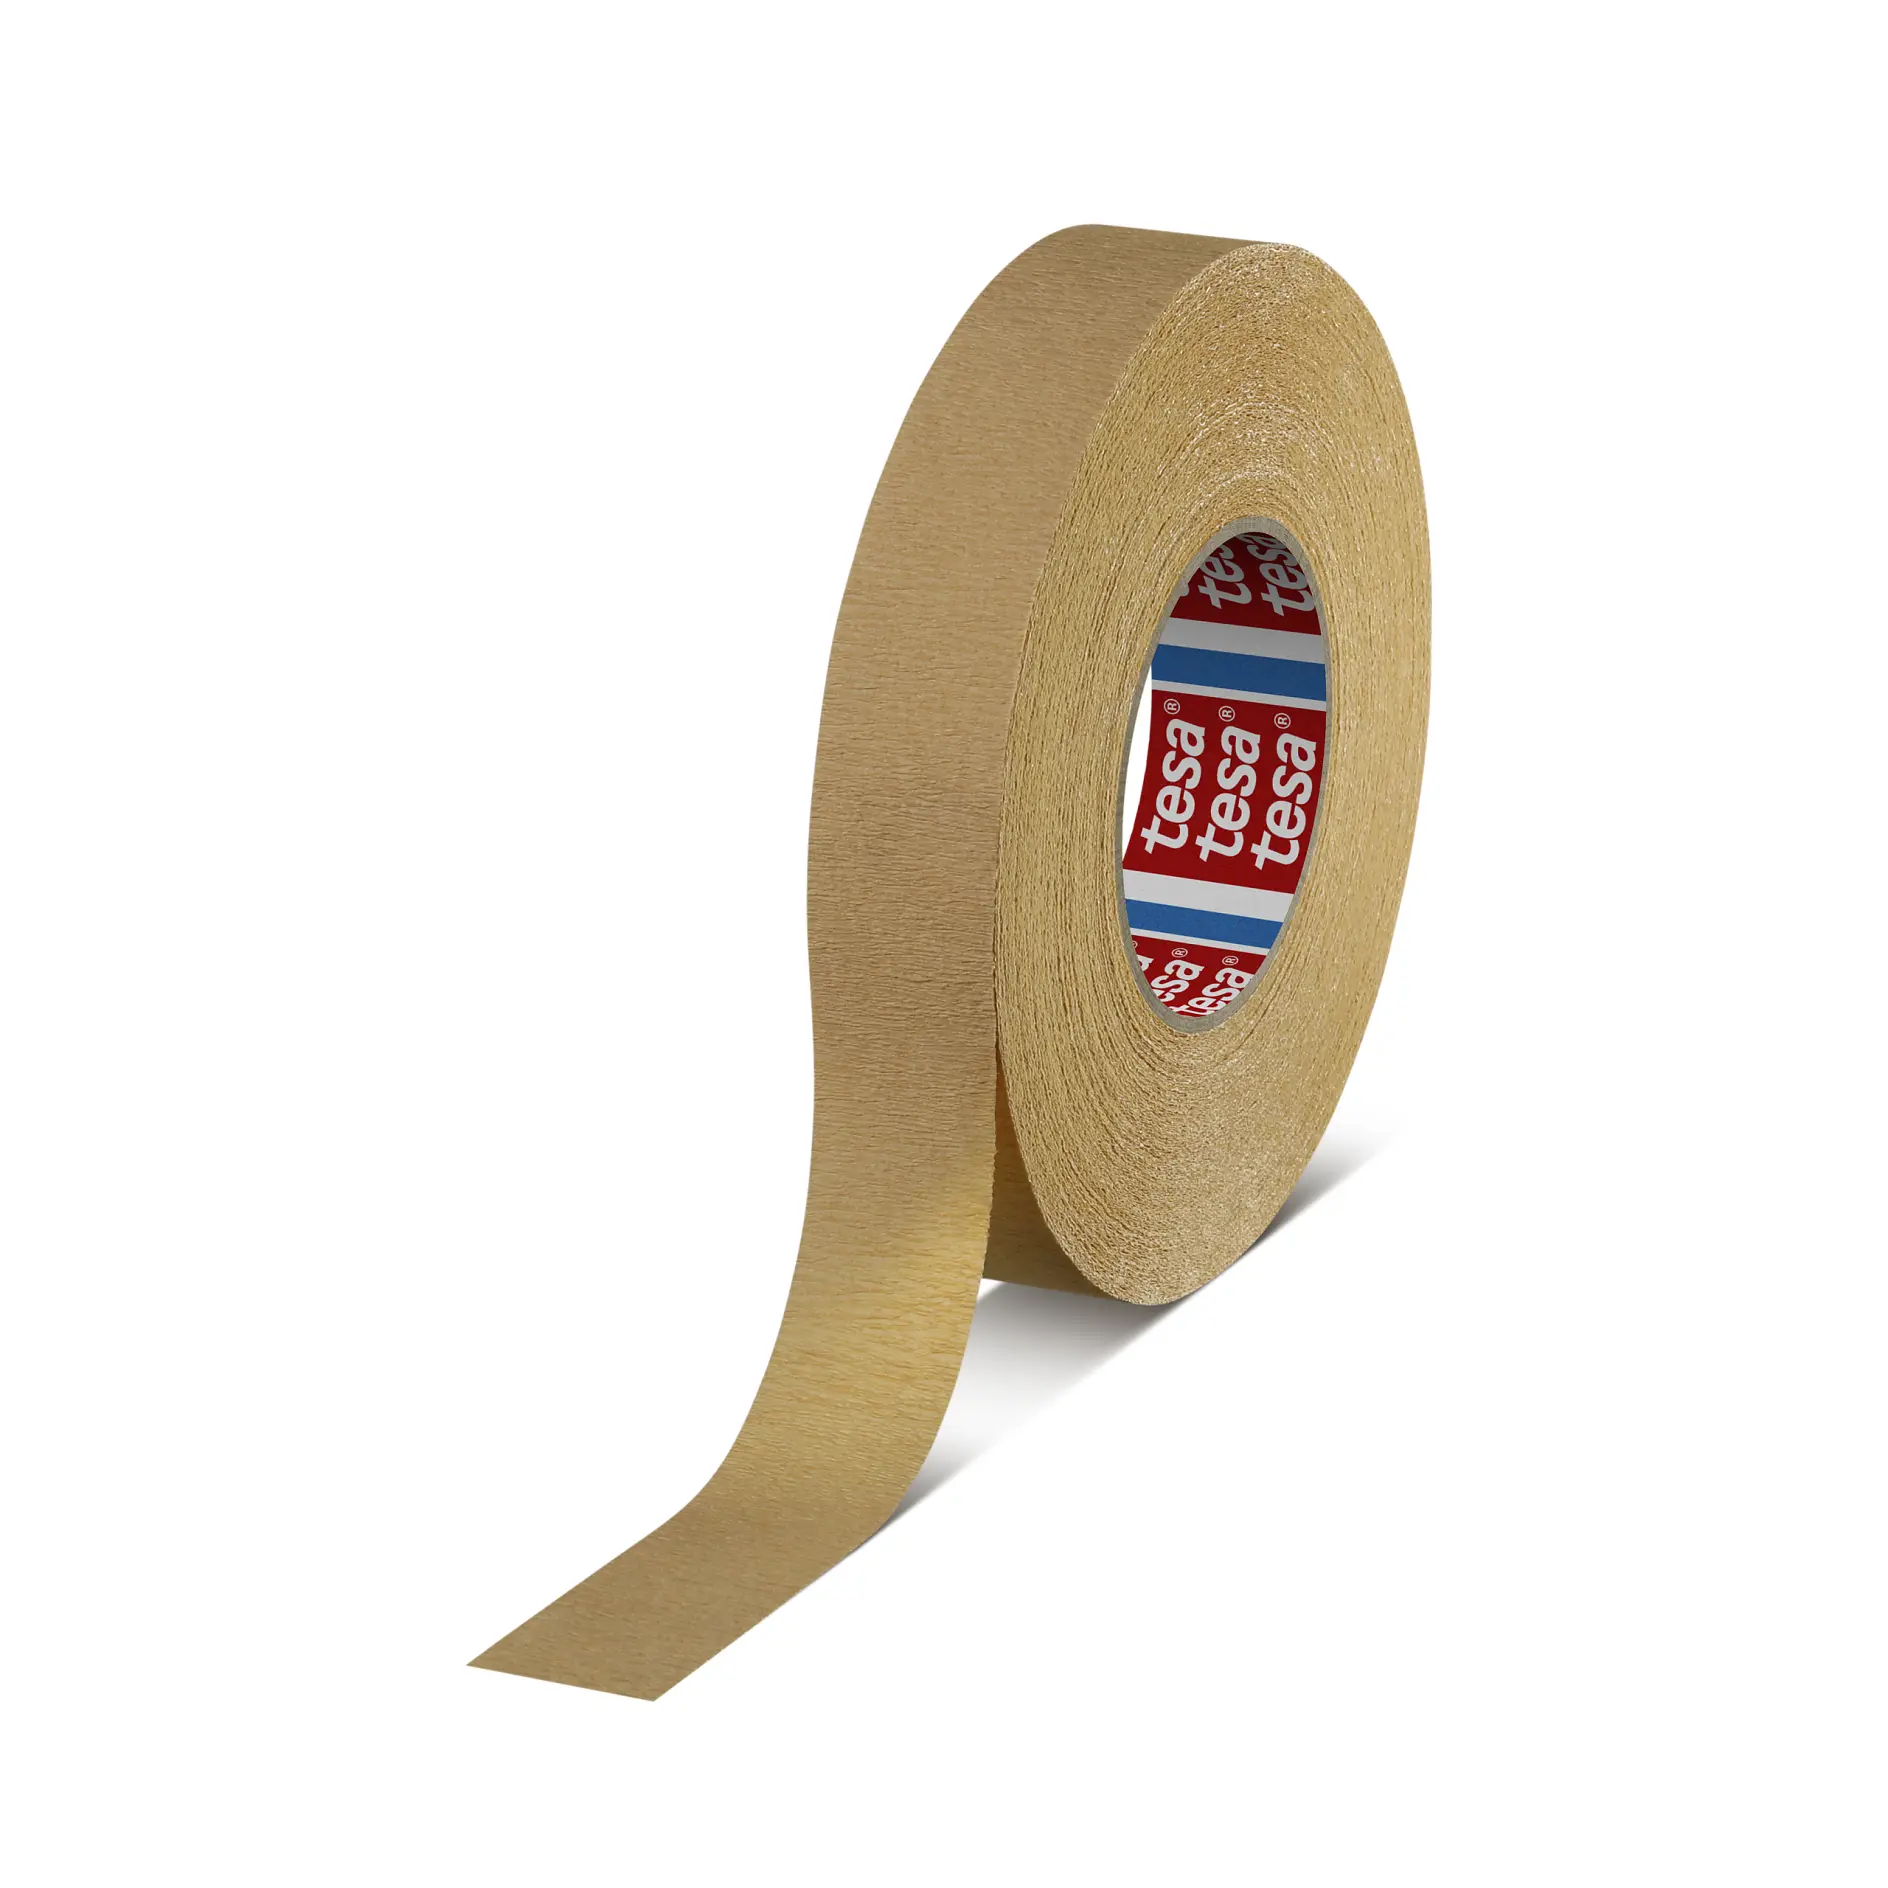 tesa-4319-flexible-masking-tape-for-paint-work-curves-brown-043190000800-pr